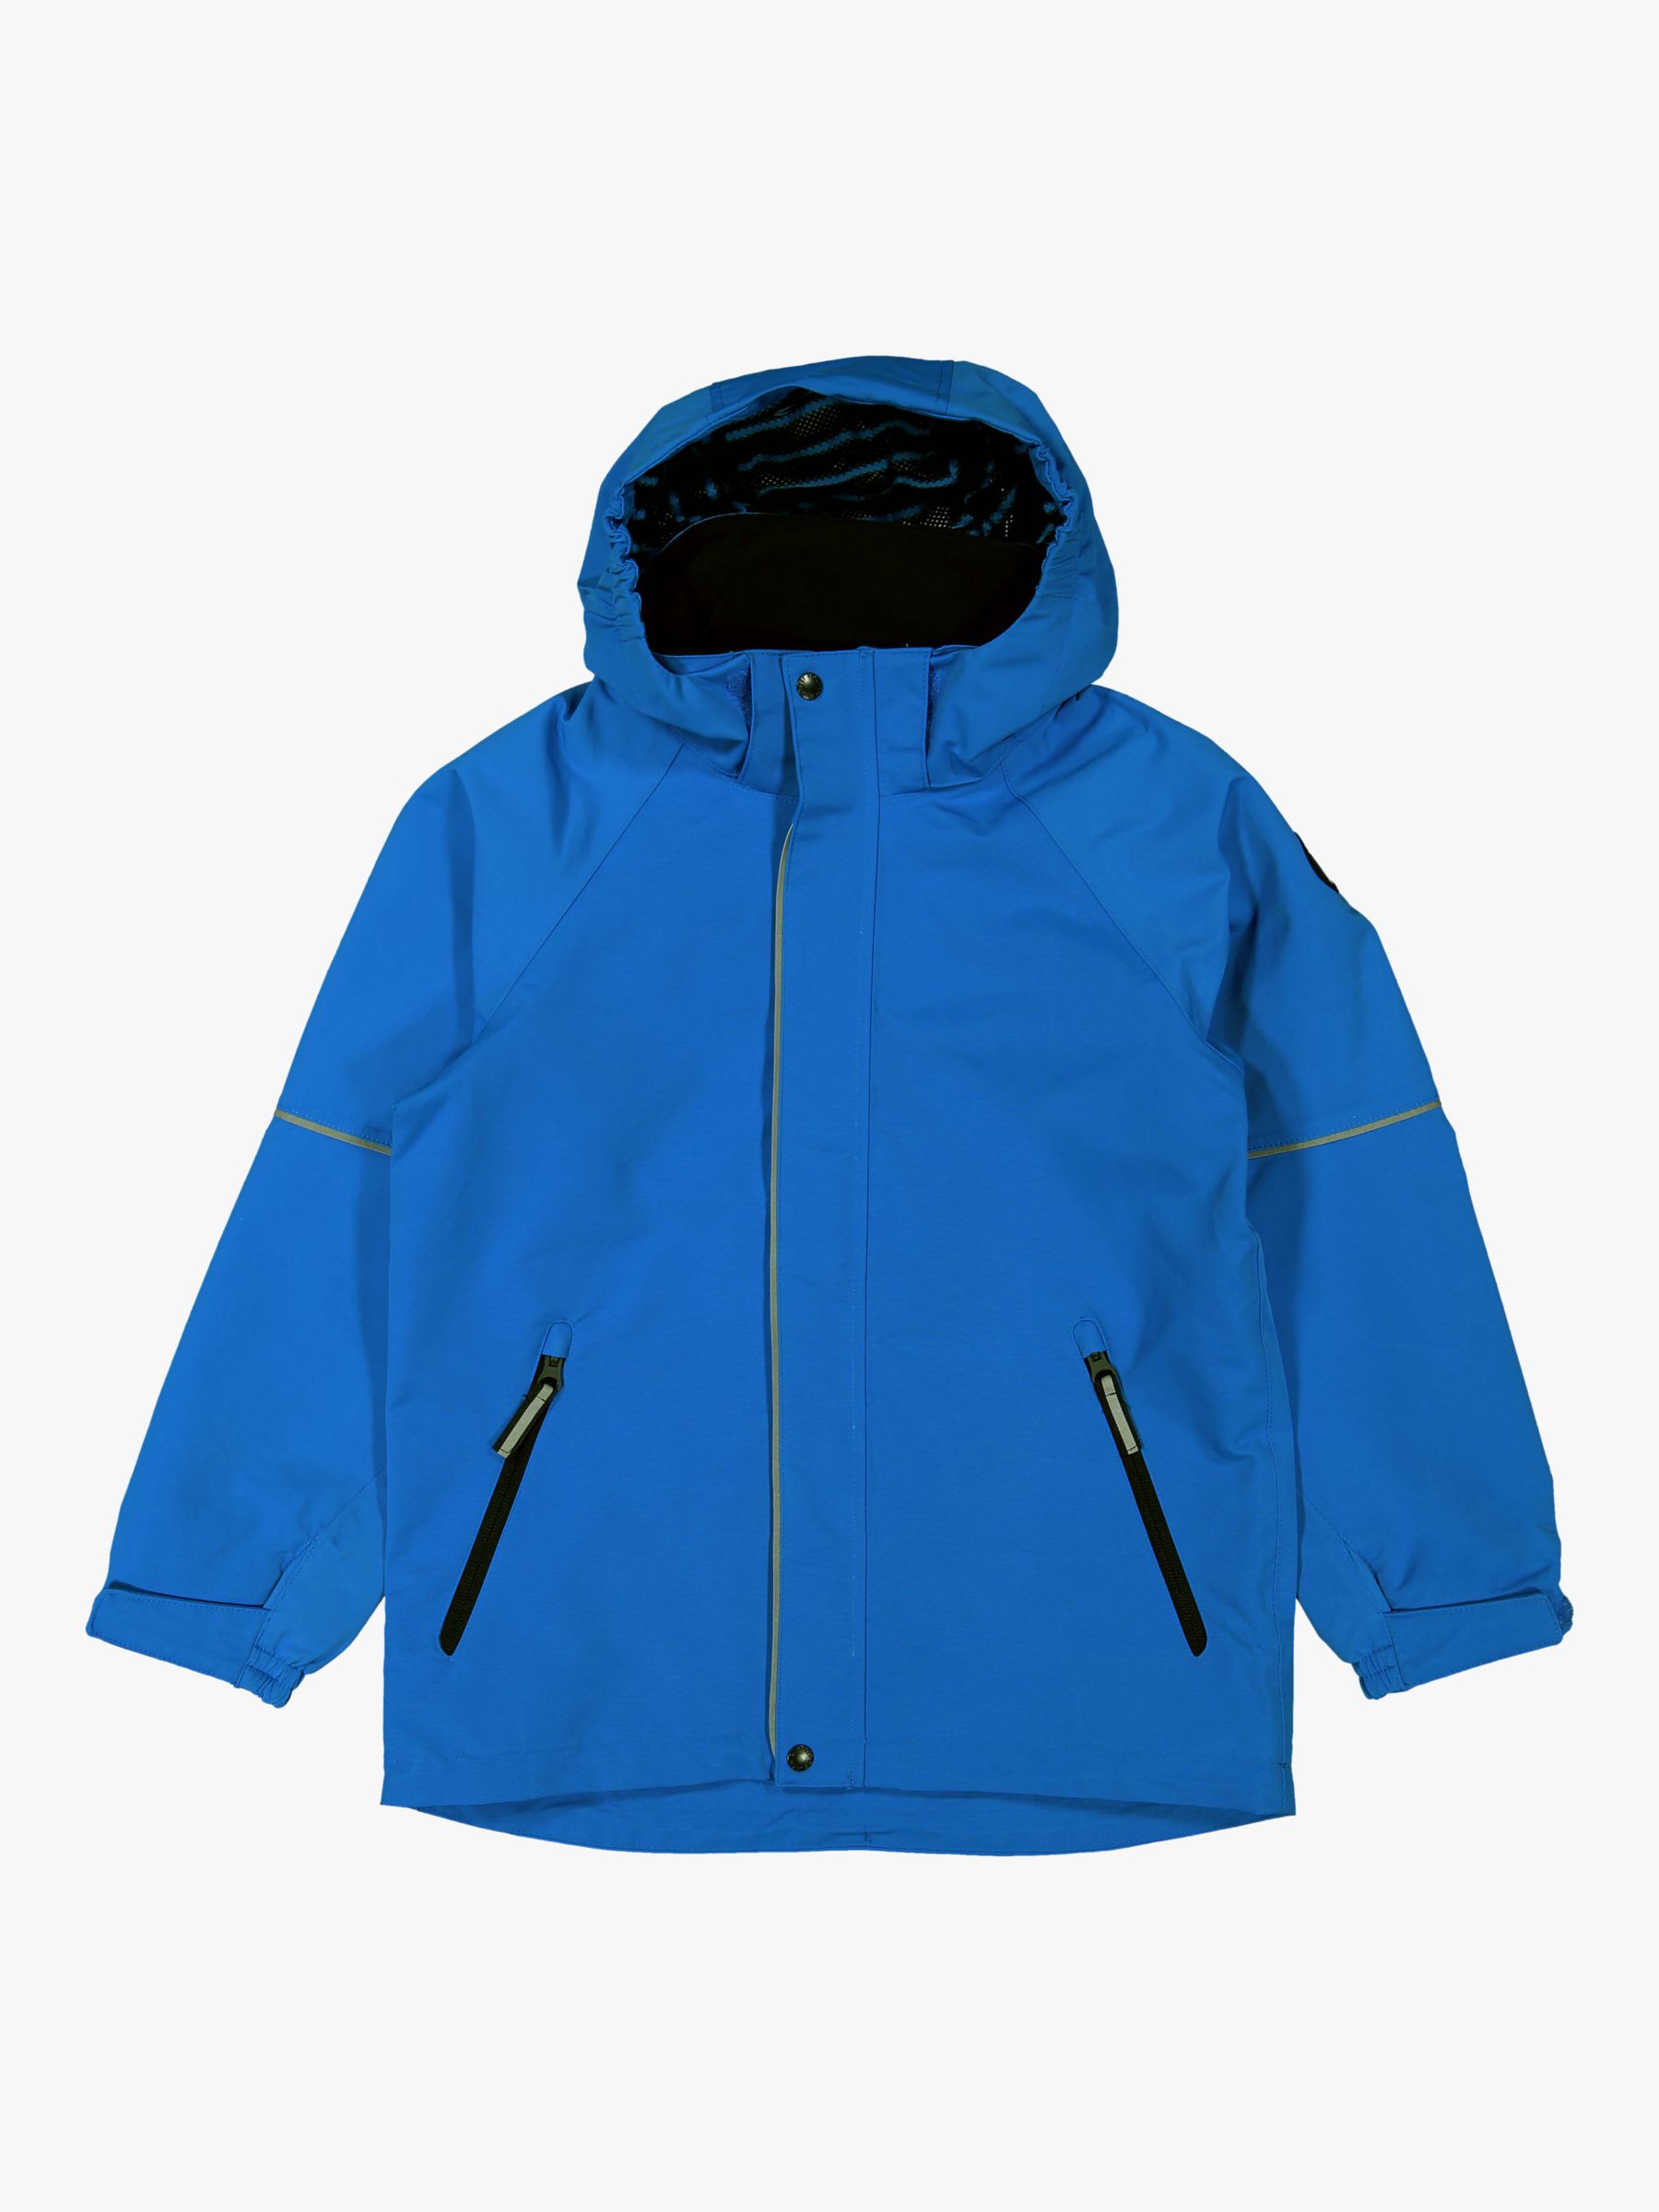 Polarn O. Pyret Children's Shell Coat, Blue at John Lewis & Partners